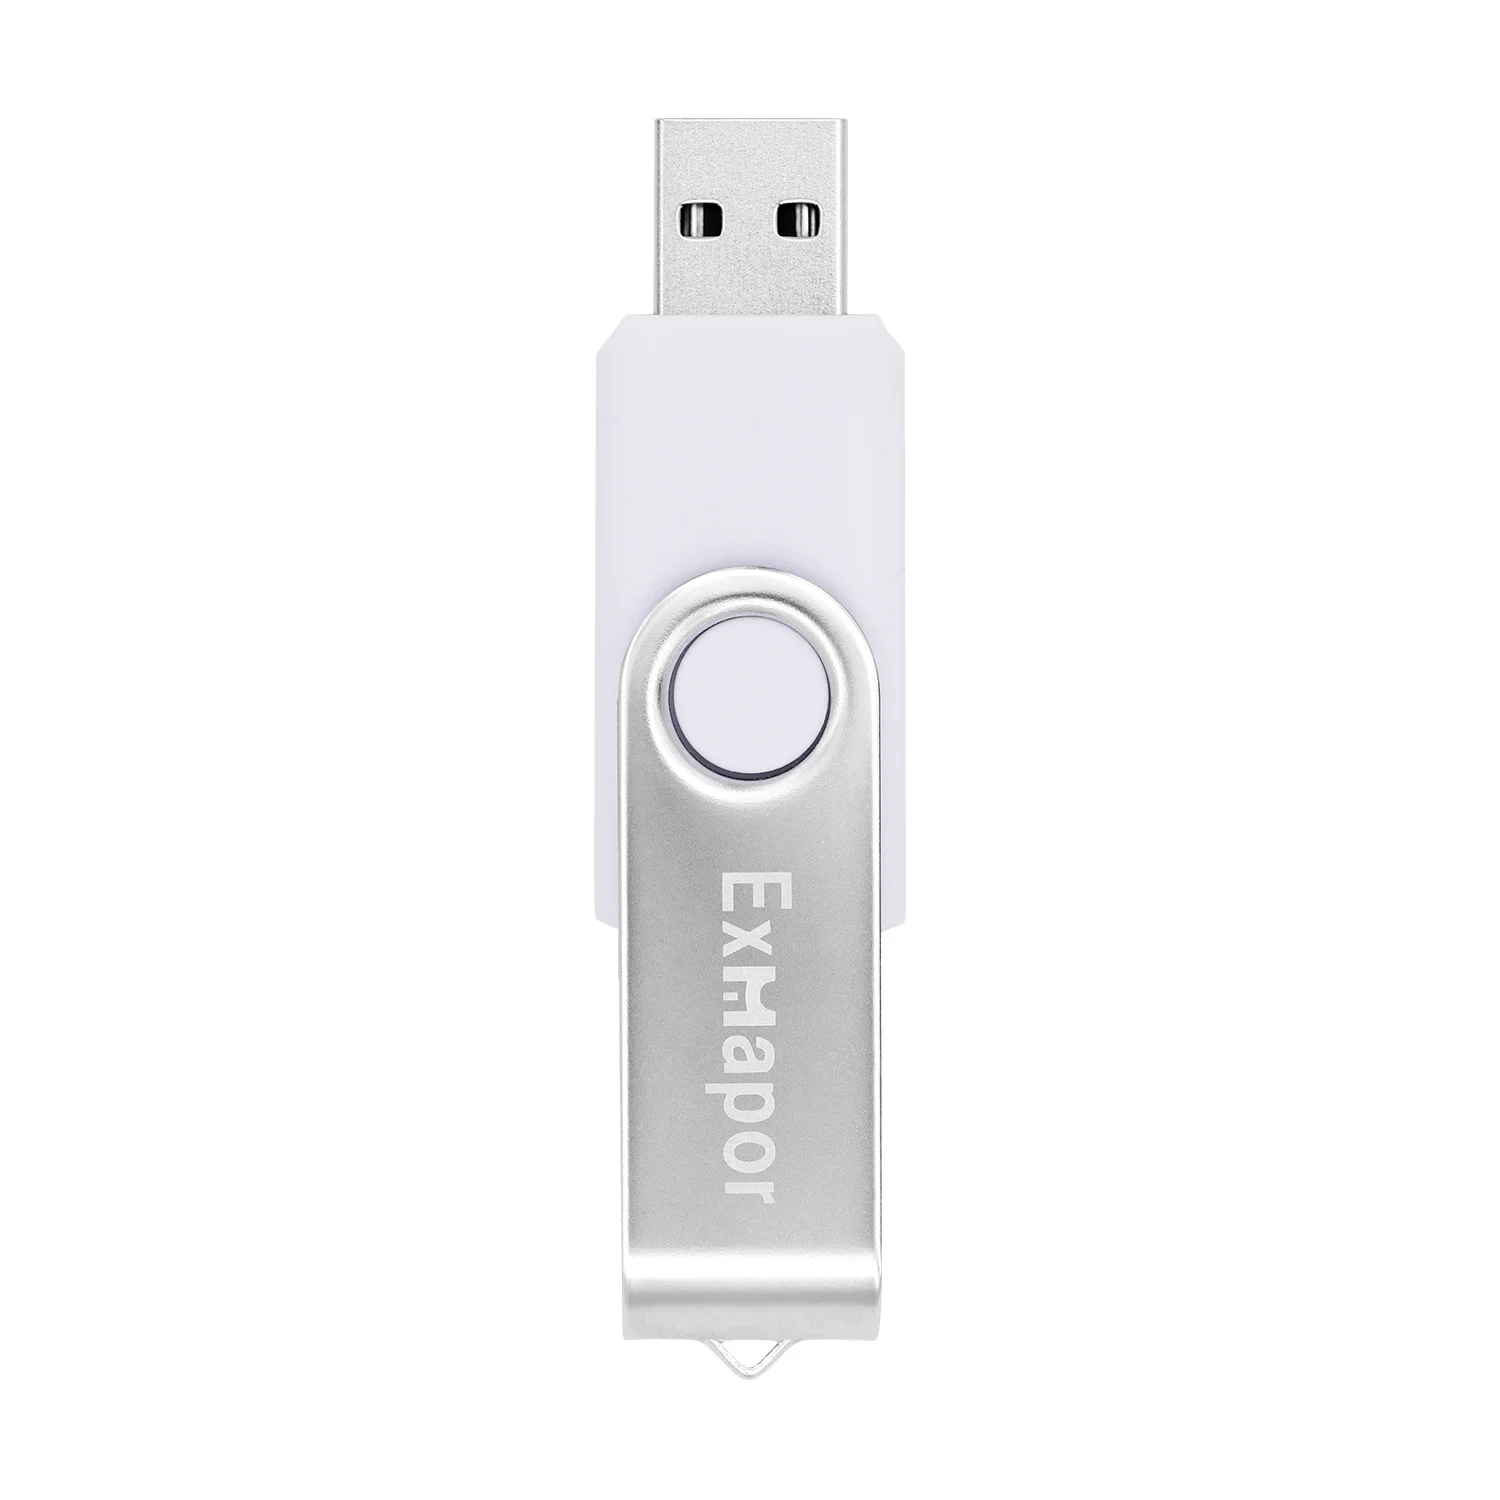 Exmapor 32GB USB 2.0 Flash Drive Multi Colours Thumb Pen Drive Flash Memory Stick Swivel Keychain Design 32GB USB Data Storage micro usb flash drive